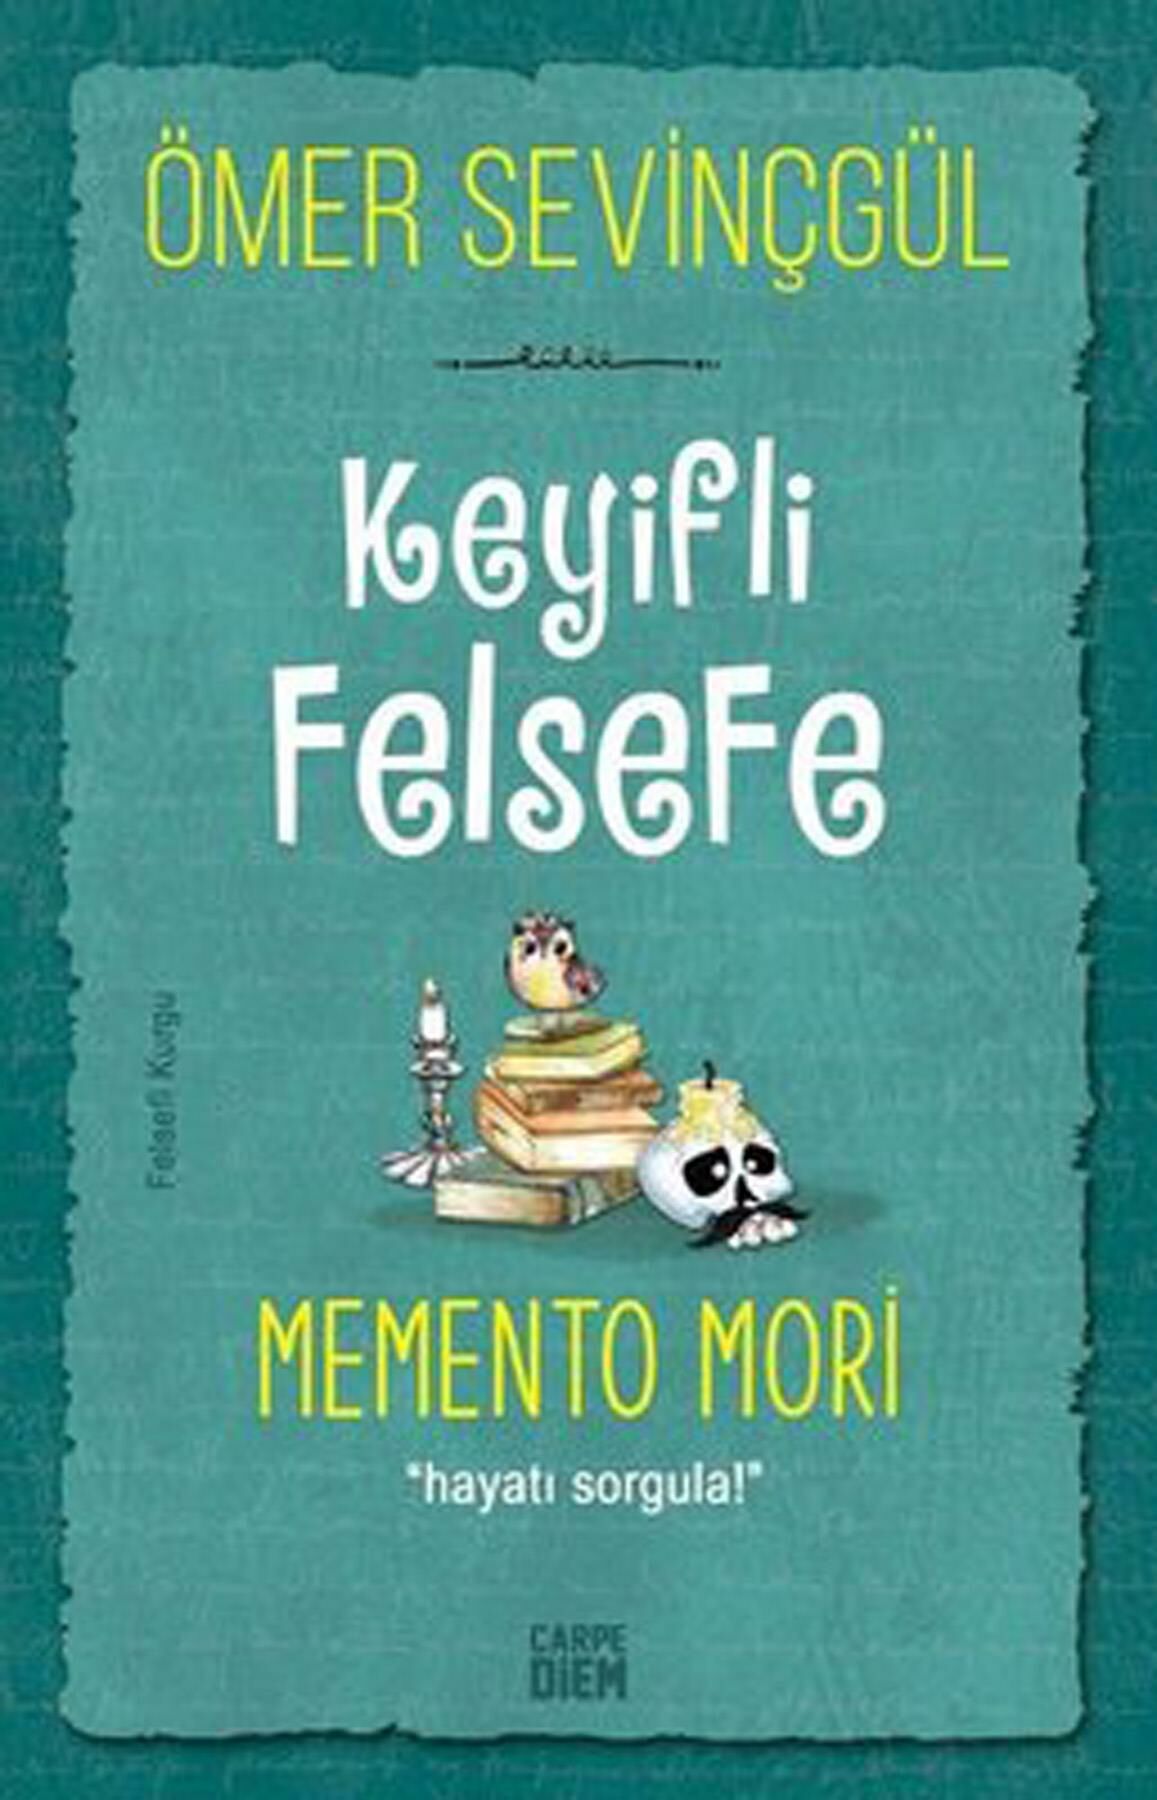 Keyifli Felsefe: Memento Mori